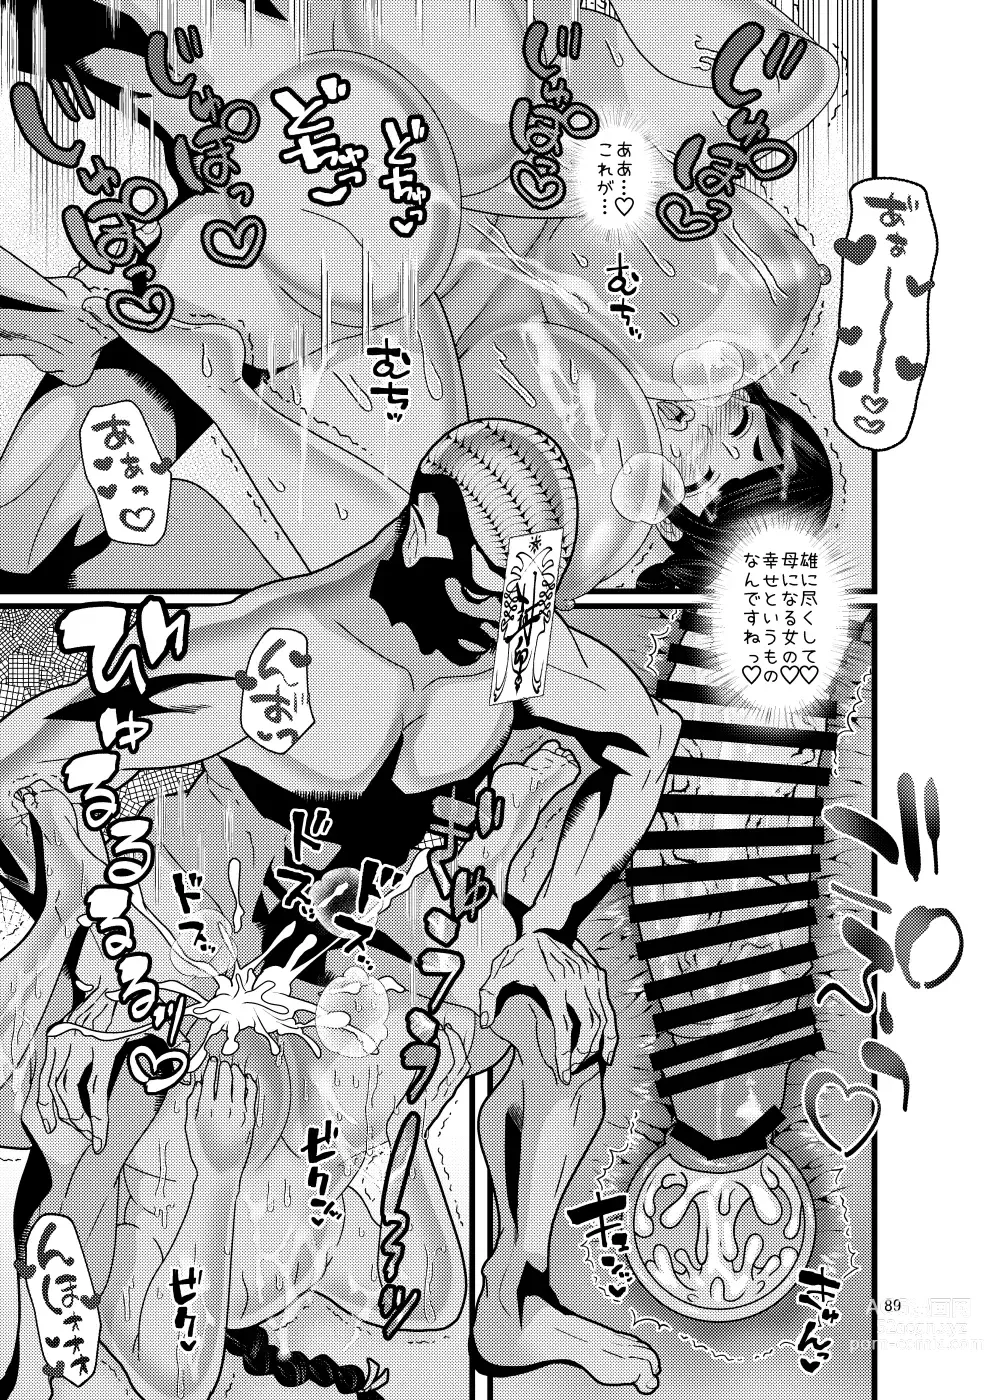 Page 89 of doujinshi Ochiru Hana Botan to Kikyou Hen Ni